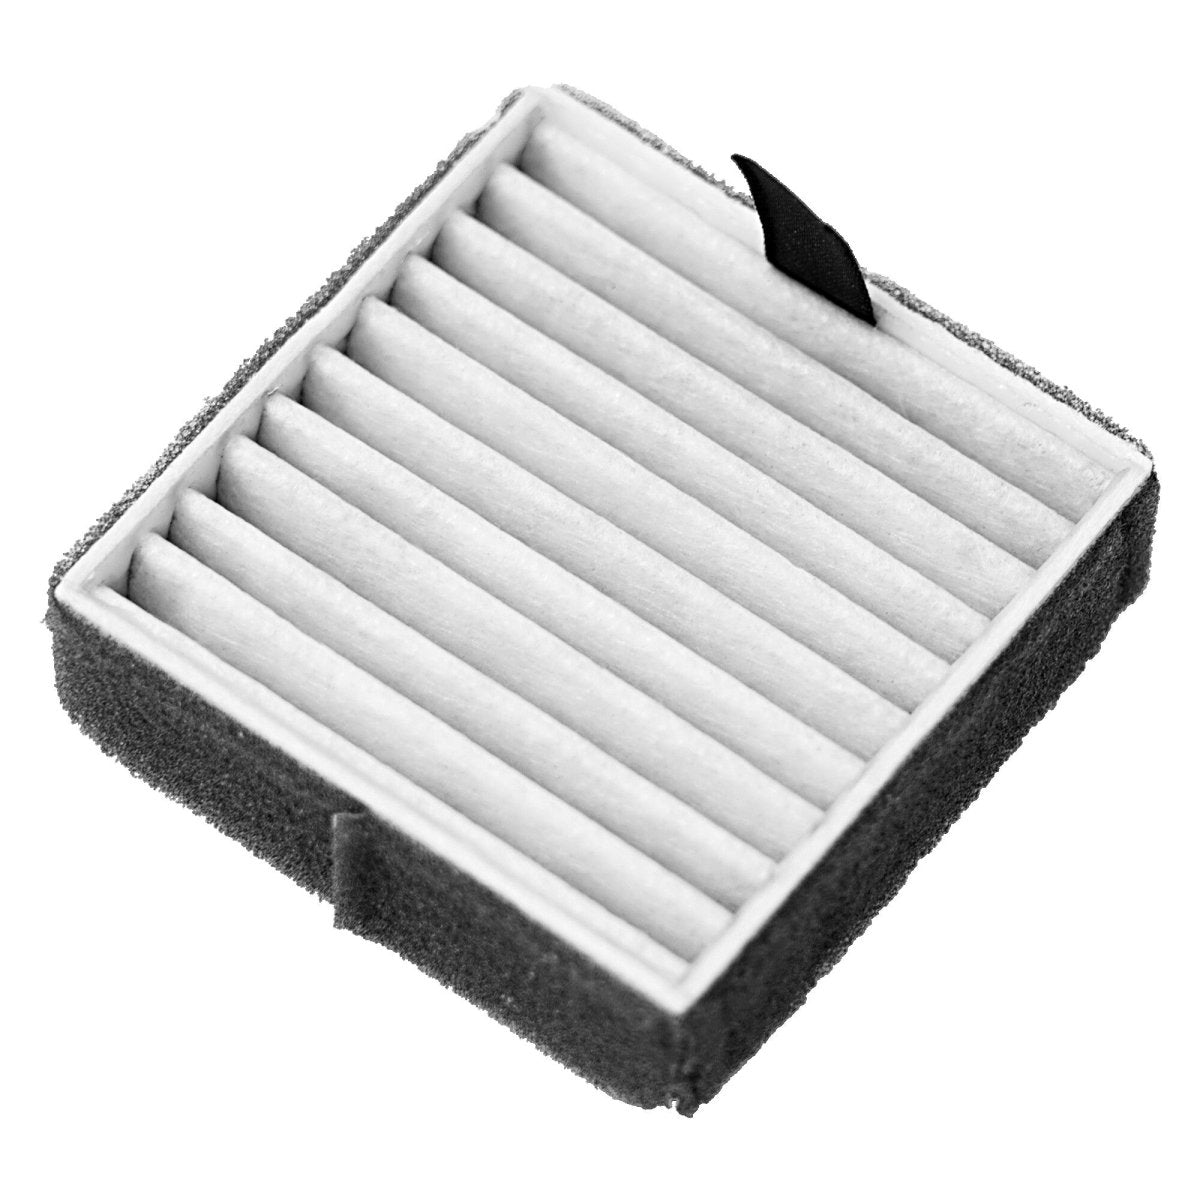 2 szt. zapasowy filtr HEPA H13 do filtra powietrza 55 x 55 - eshop LEDVANCE 4058075566866